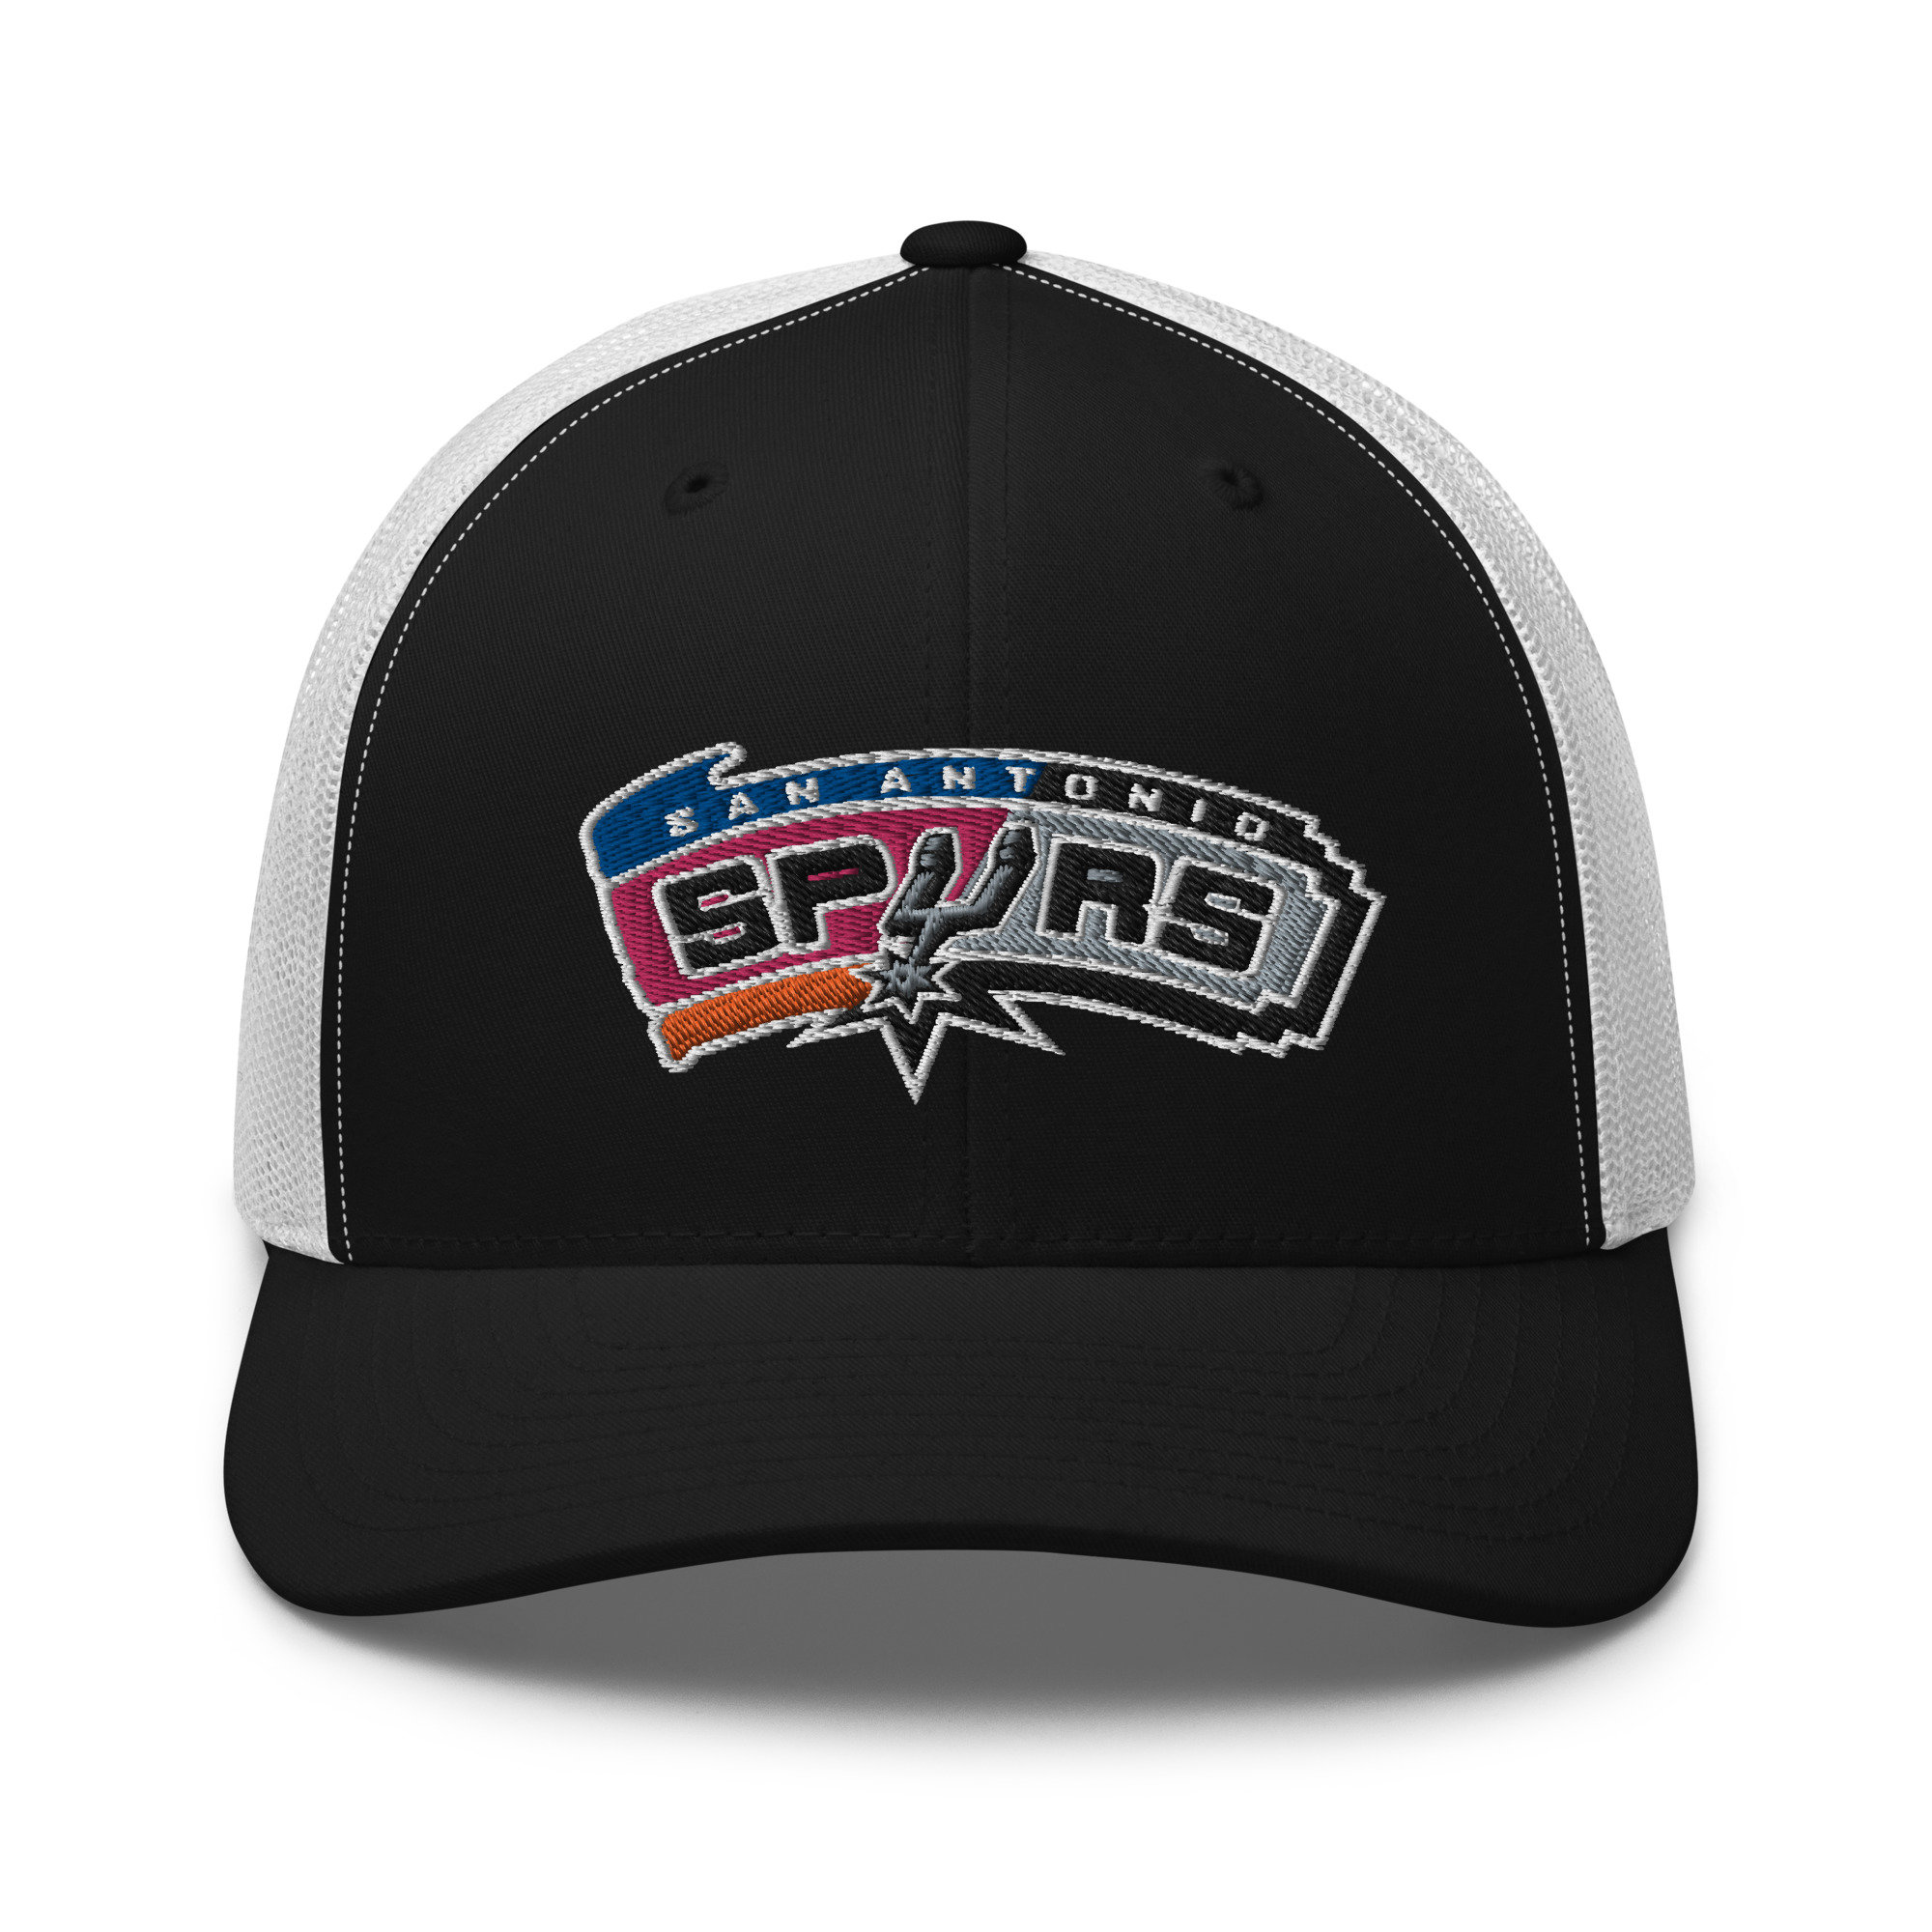 Adidas San Antonio Spurs 2014 NBA Championship Finals Cap Hat Snapback